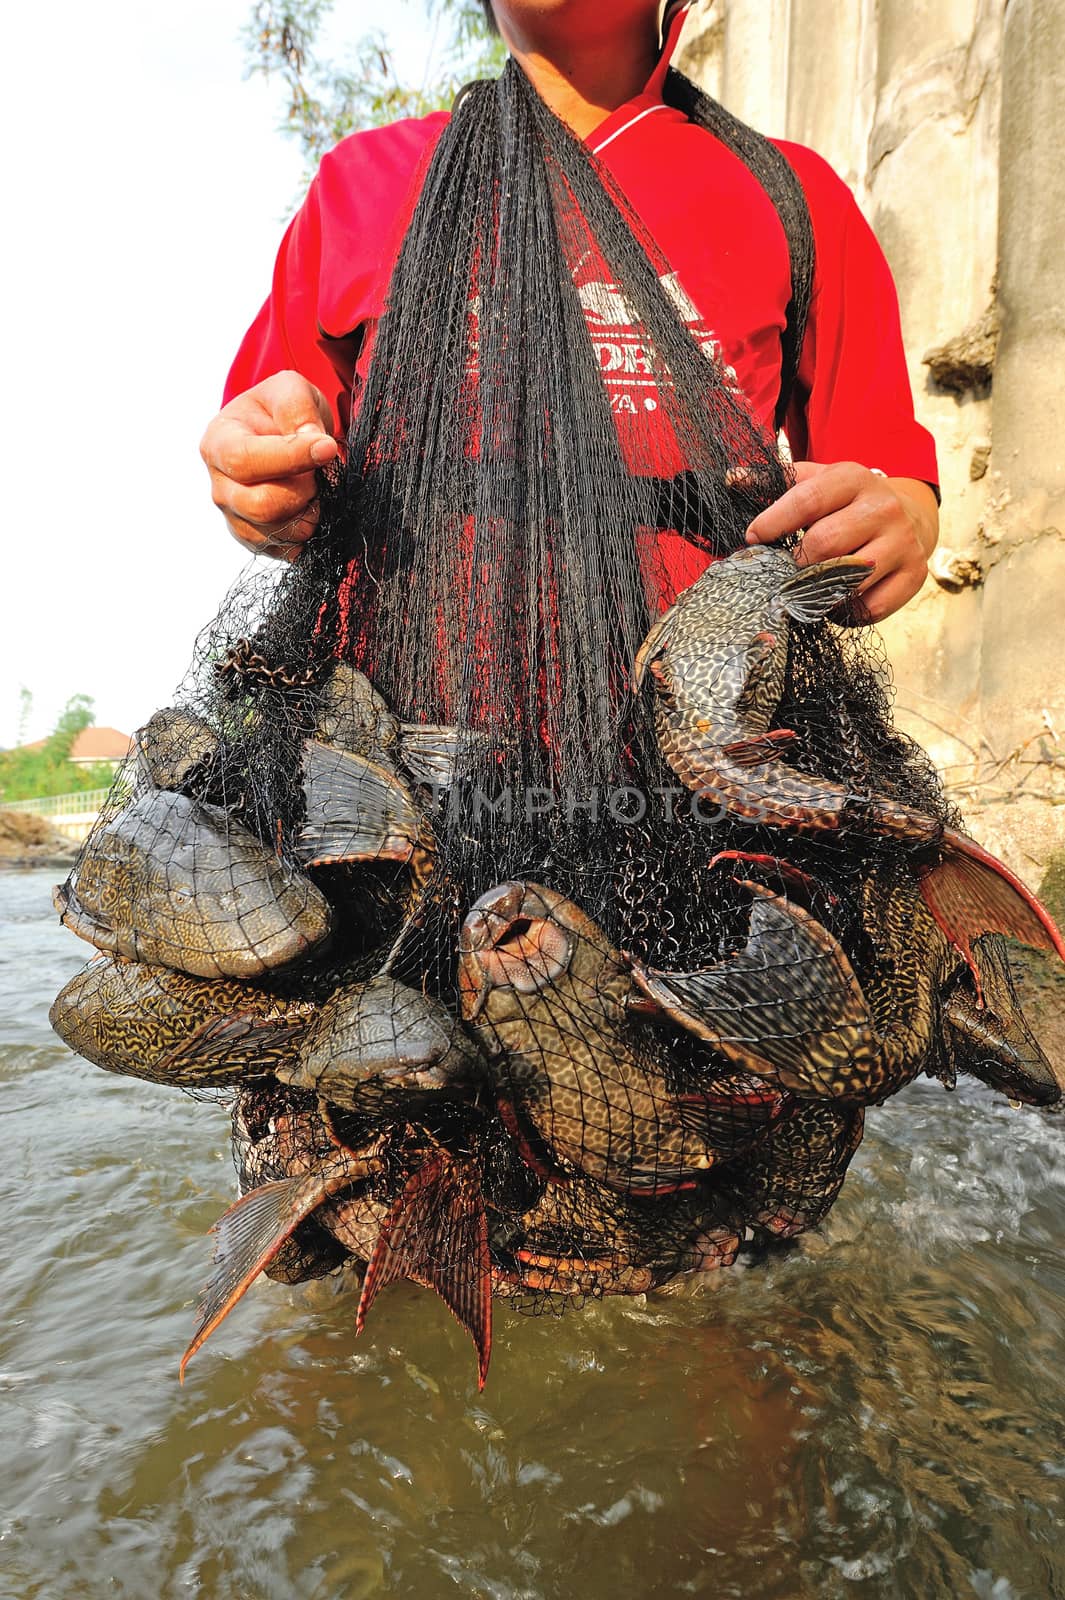 Plecostumus fish (sucker fish) outbreak in river, Thailand. by think4photop